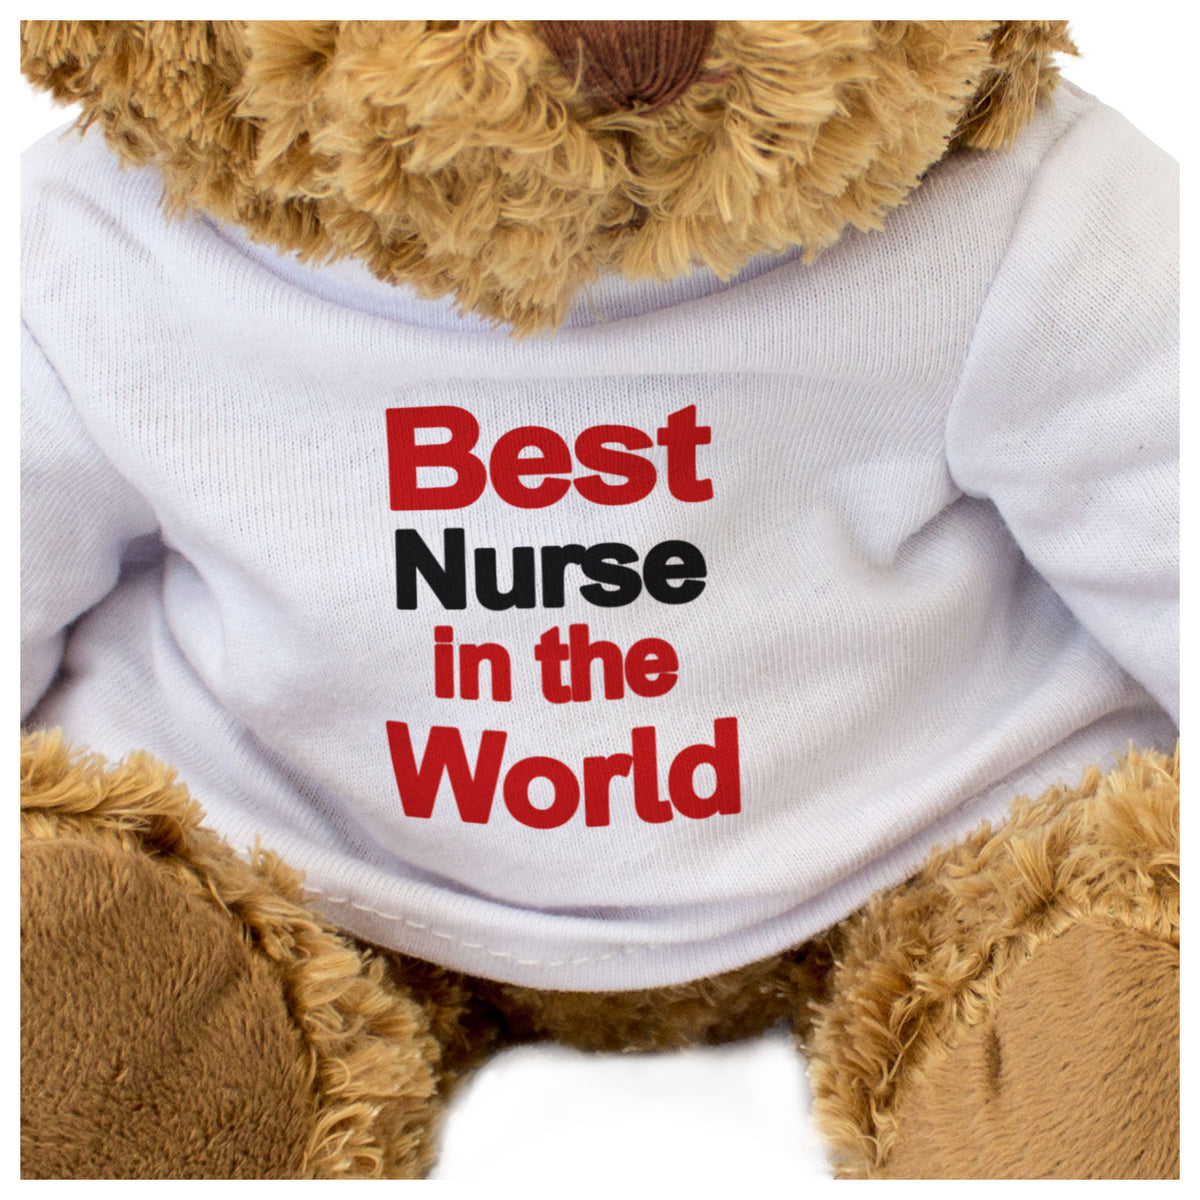 Best Nurse In The World Teddy Bear - Gift Present